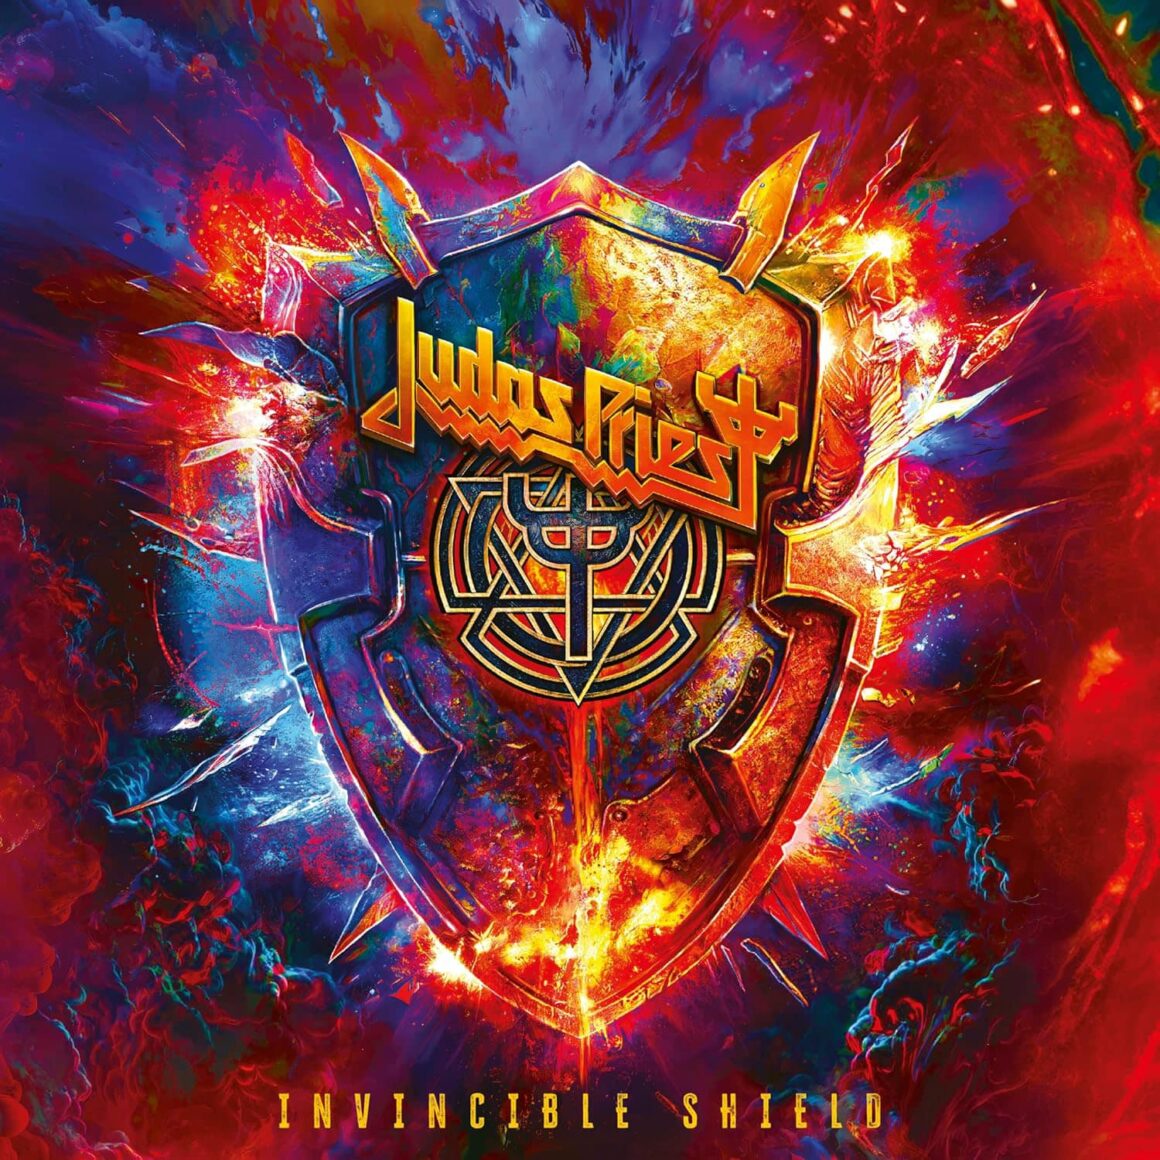 Judas Priest Reveal Tracklist for New Album ‘Invincible Shield’